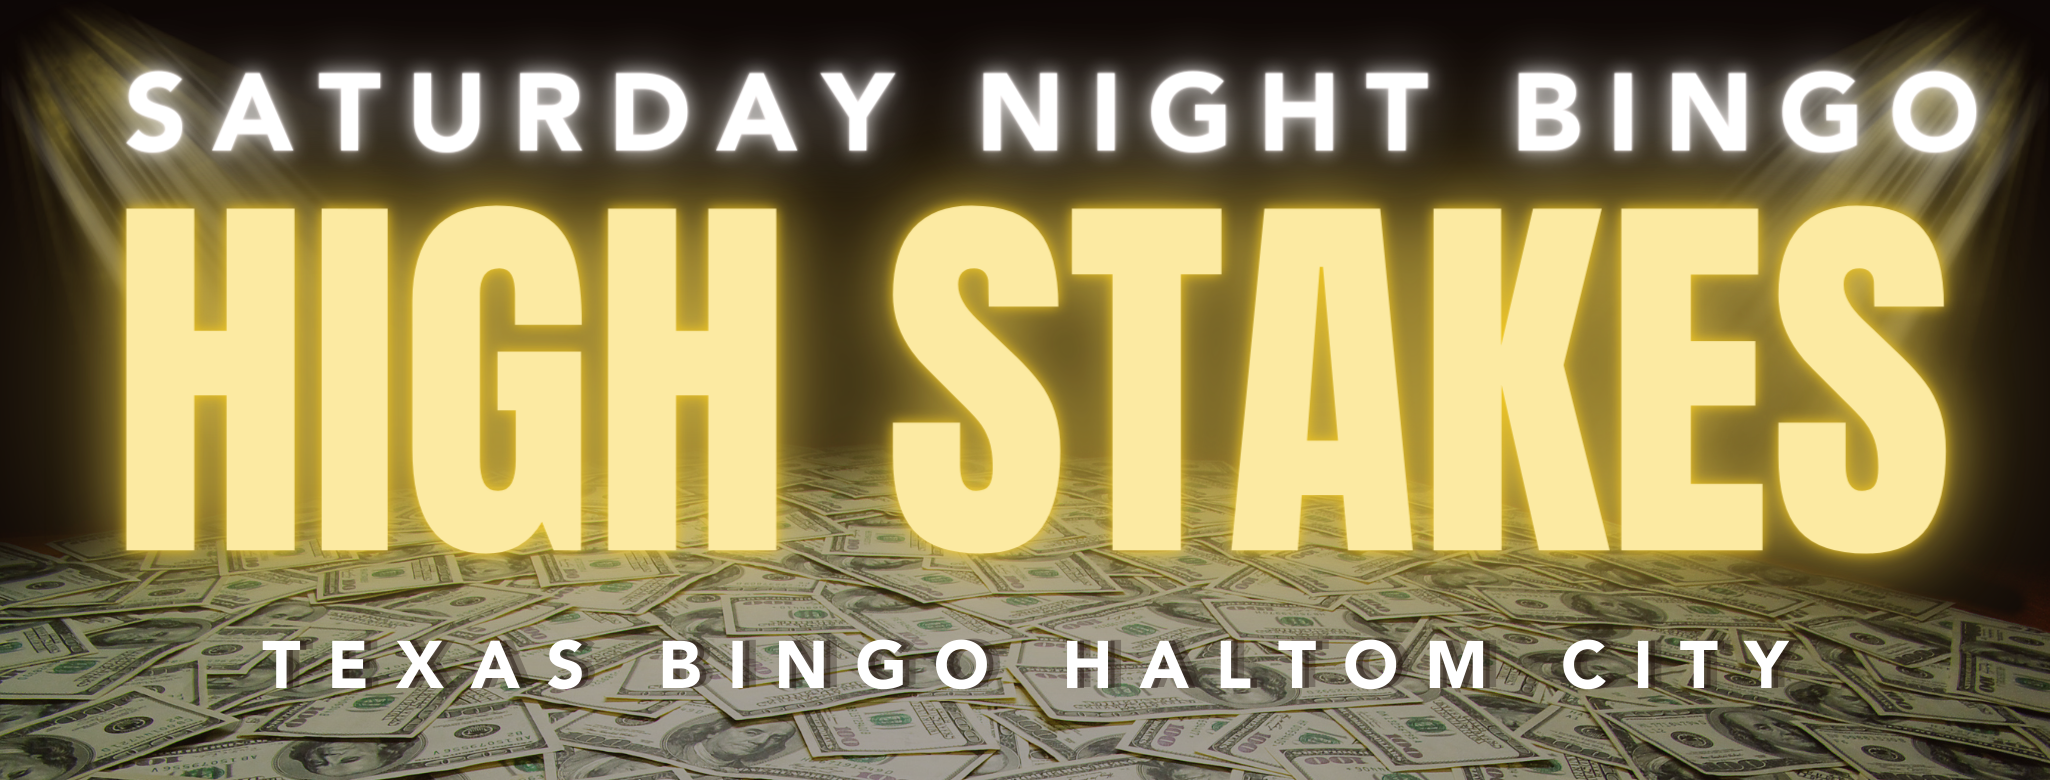 Haltom City High Stakes Bingo